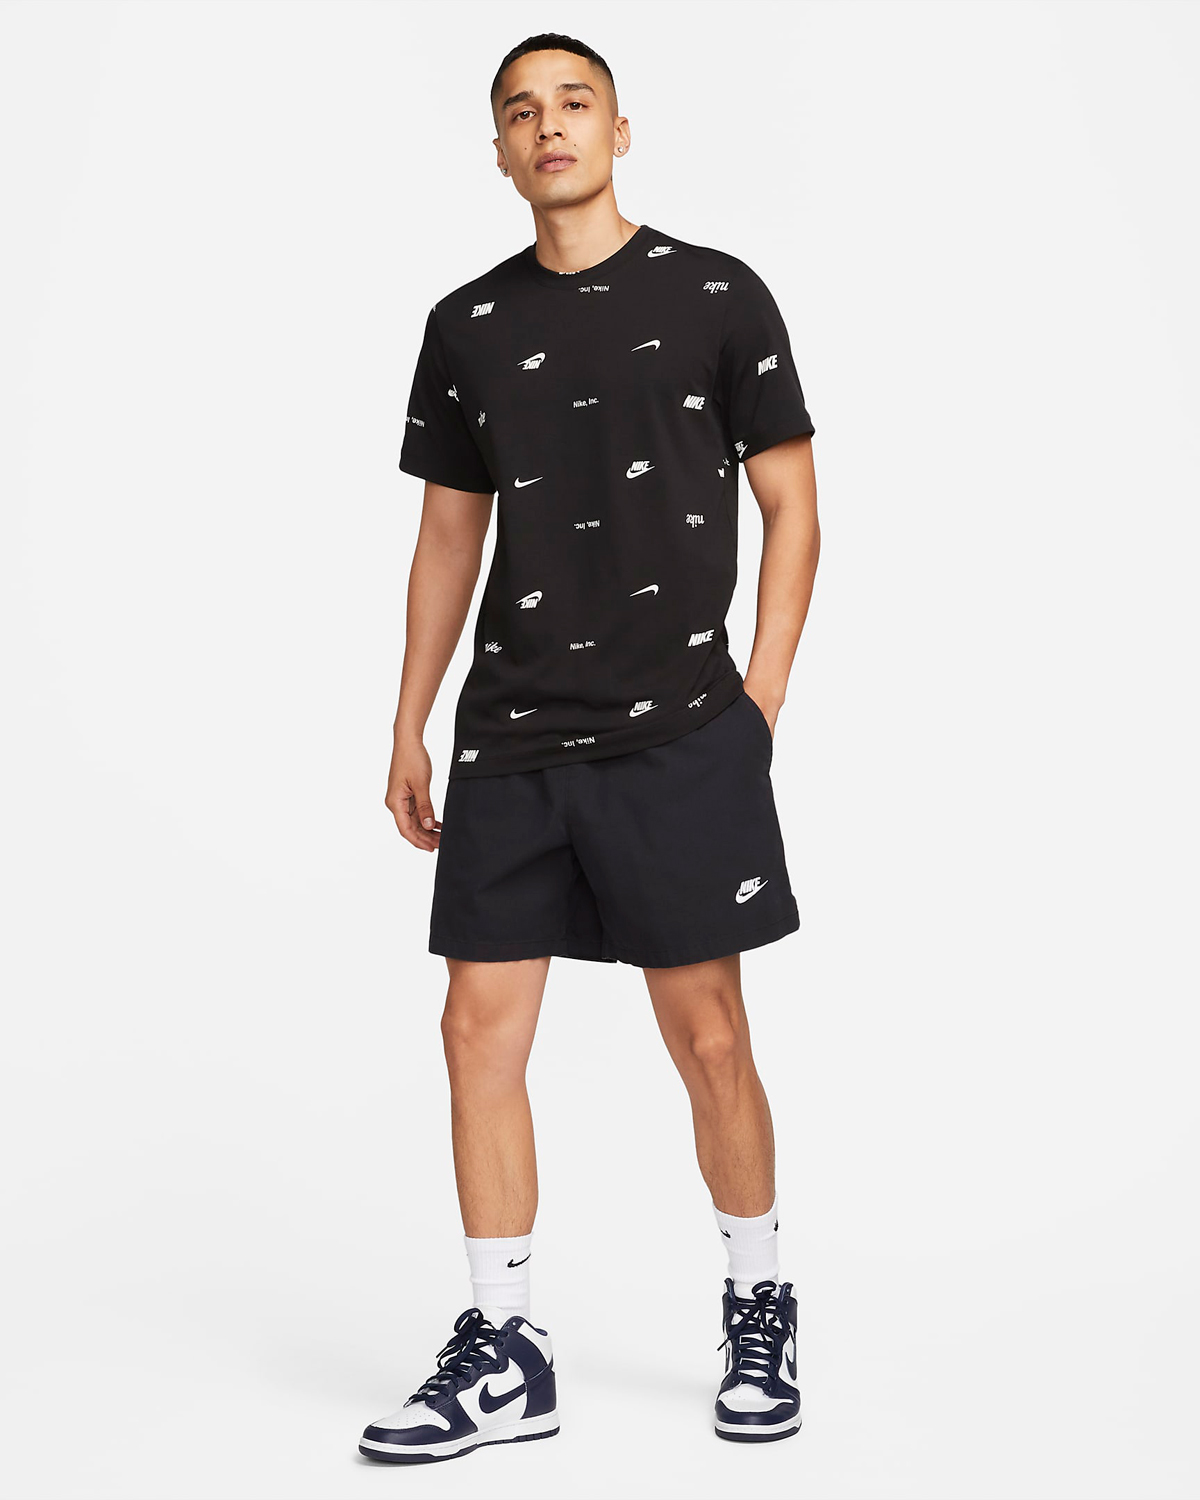 Nike-Club-Allover-Print-T-Shirt-Black-White-Outfit